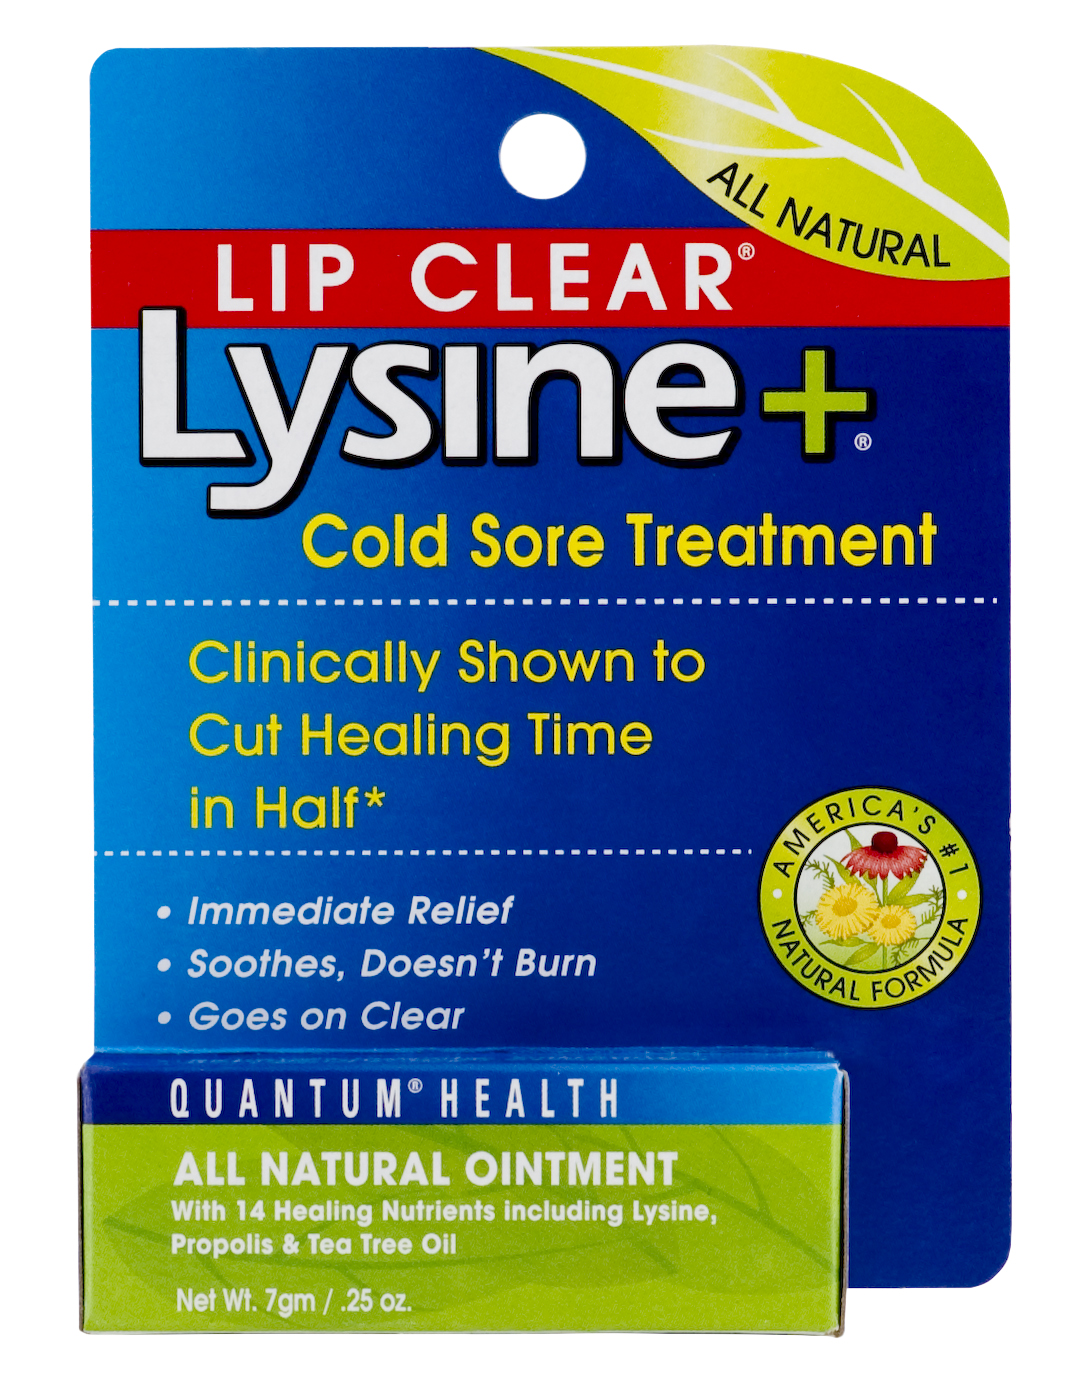 Lip Clear Lysine+ Cold Sore Ointment